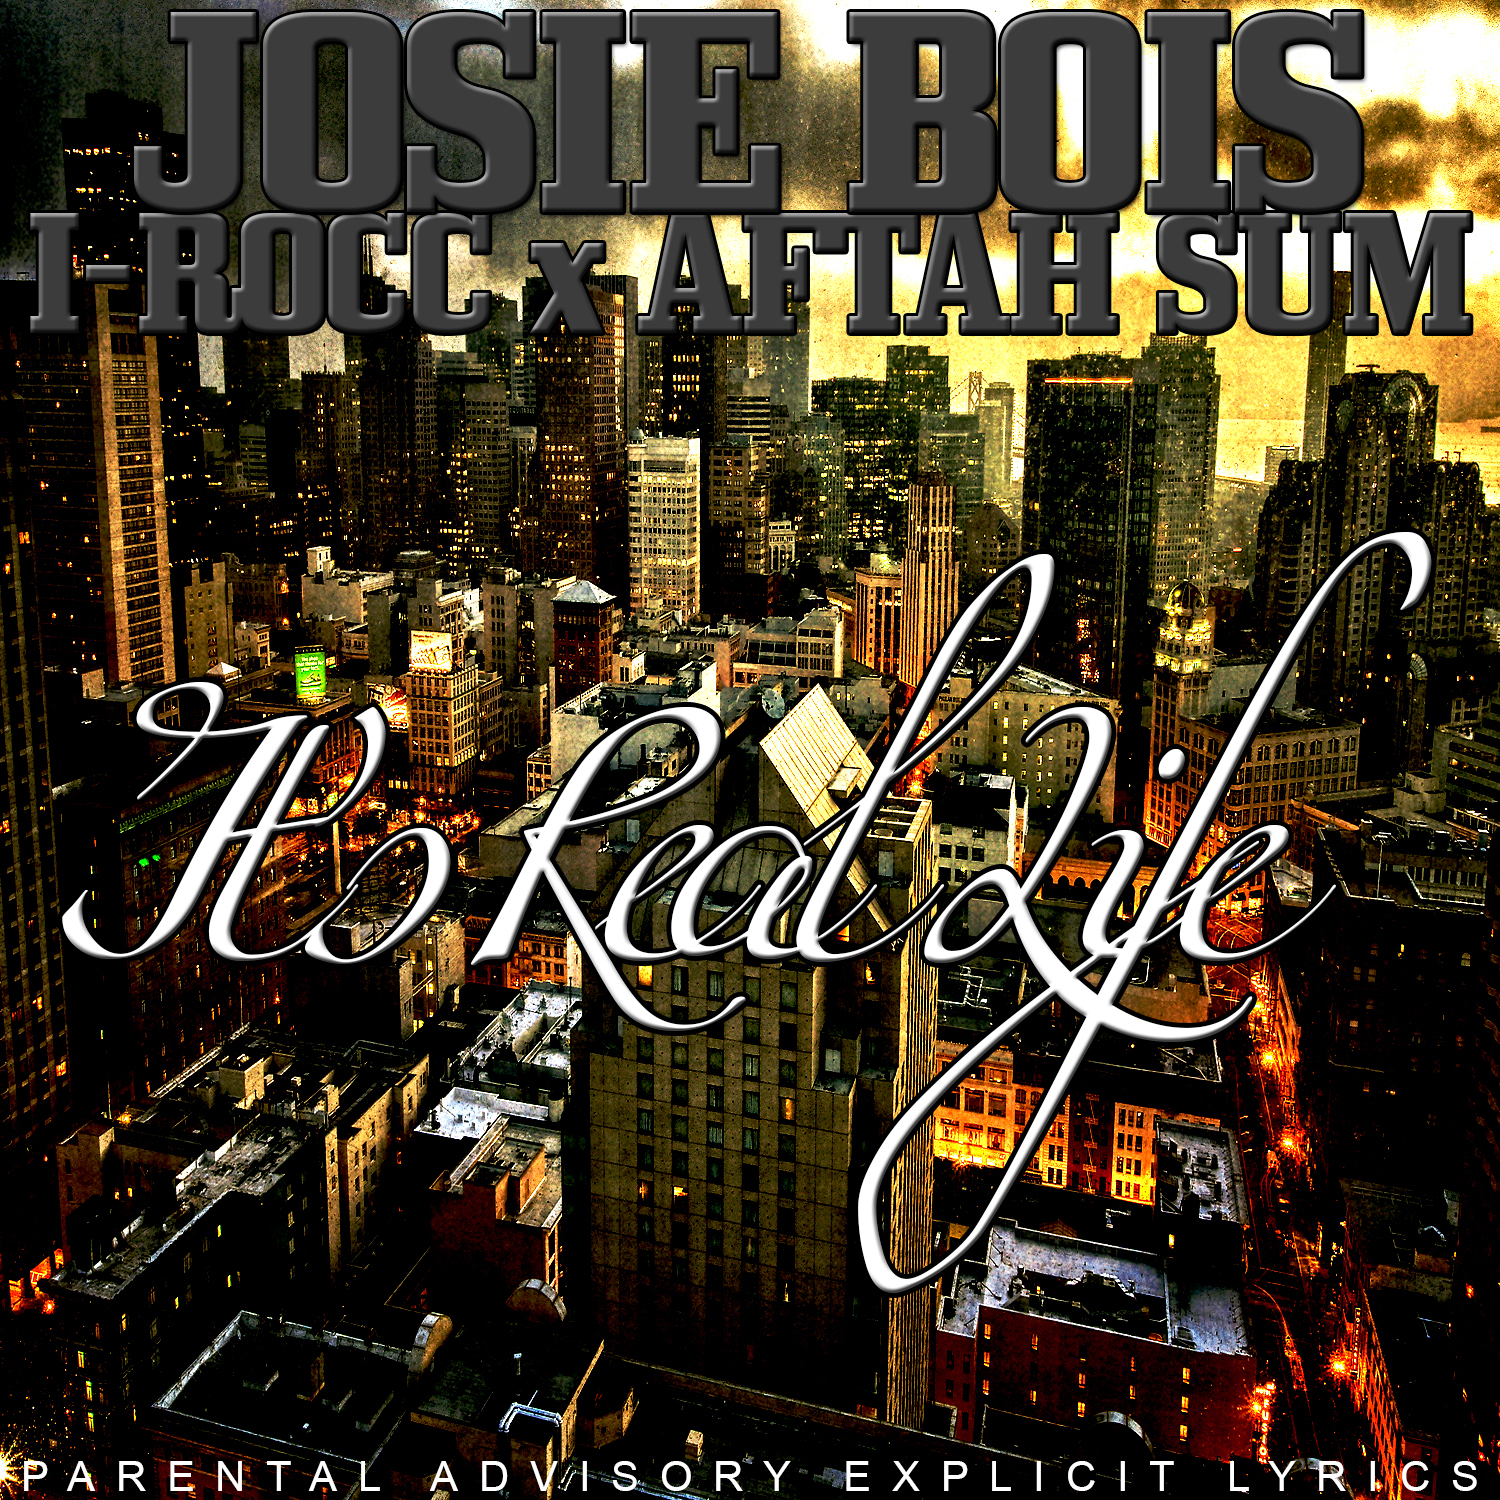 Josie Bois ft. I-Rocc & Aftah Sum - Its Real Life [Thizzler.com]